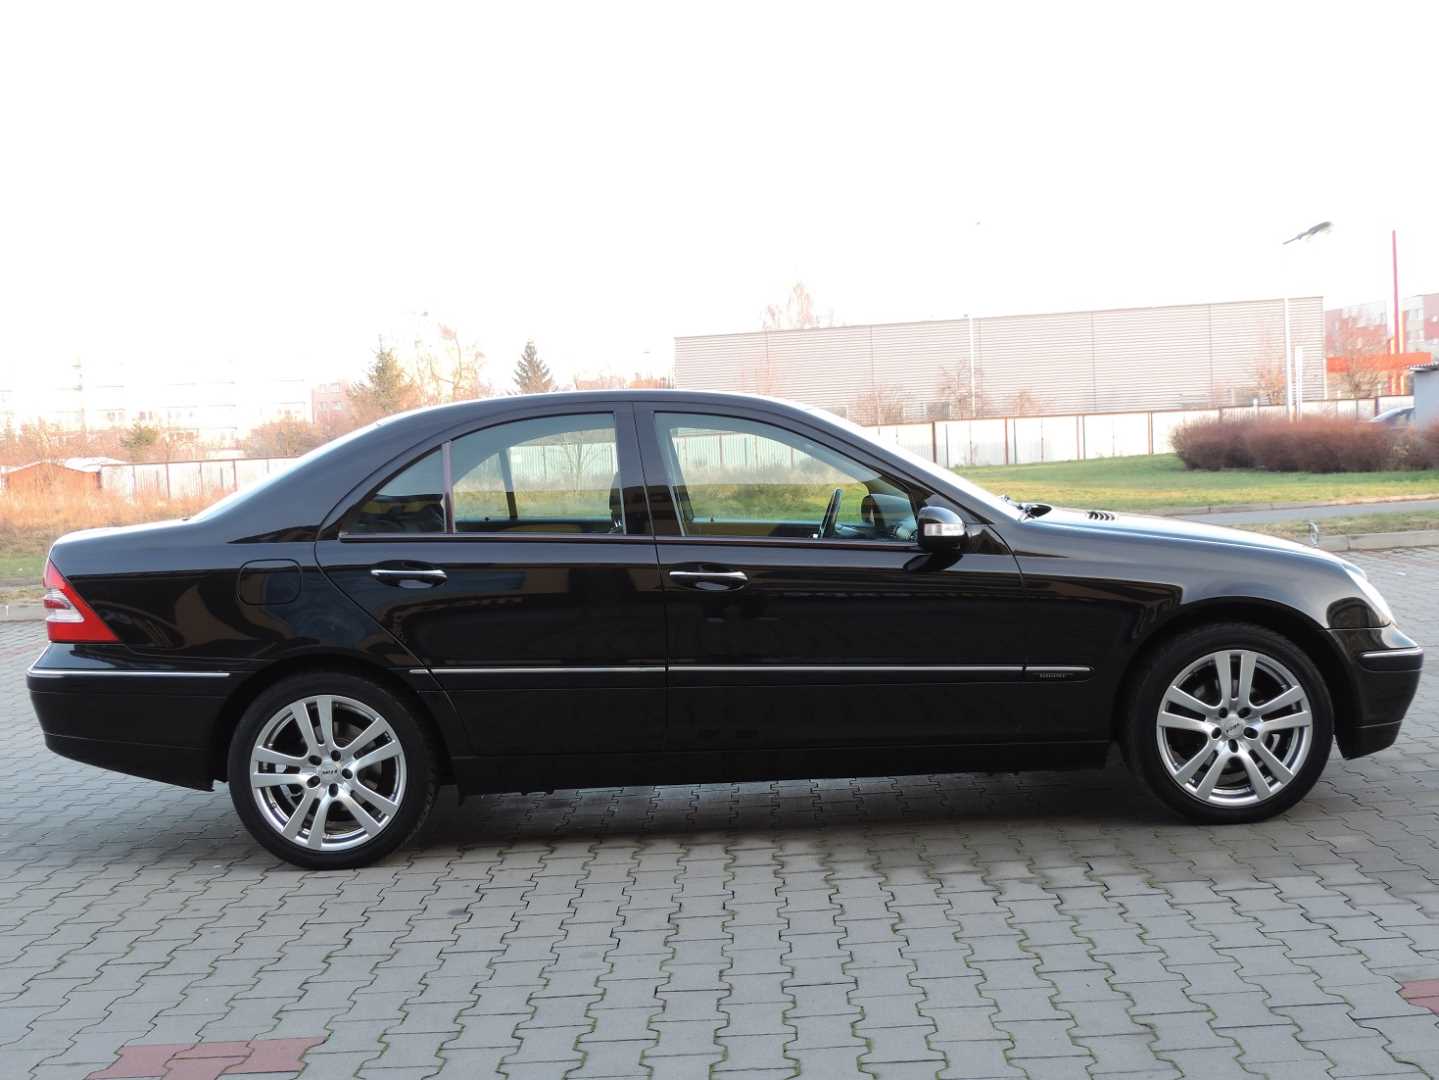 Mercedes Cklasa 1.8 benzyna 143 KM 2003r. (Ostrowiec